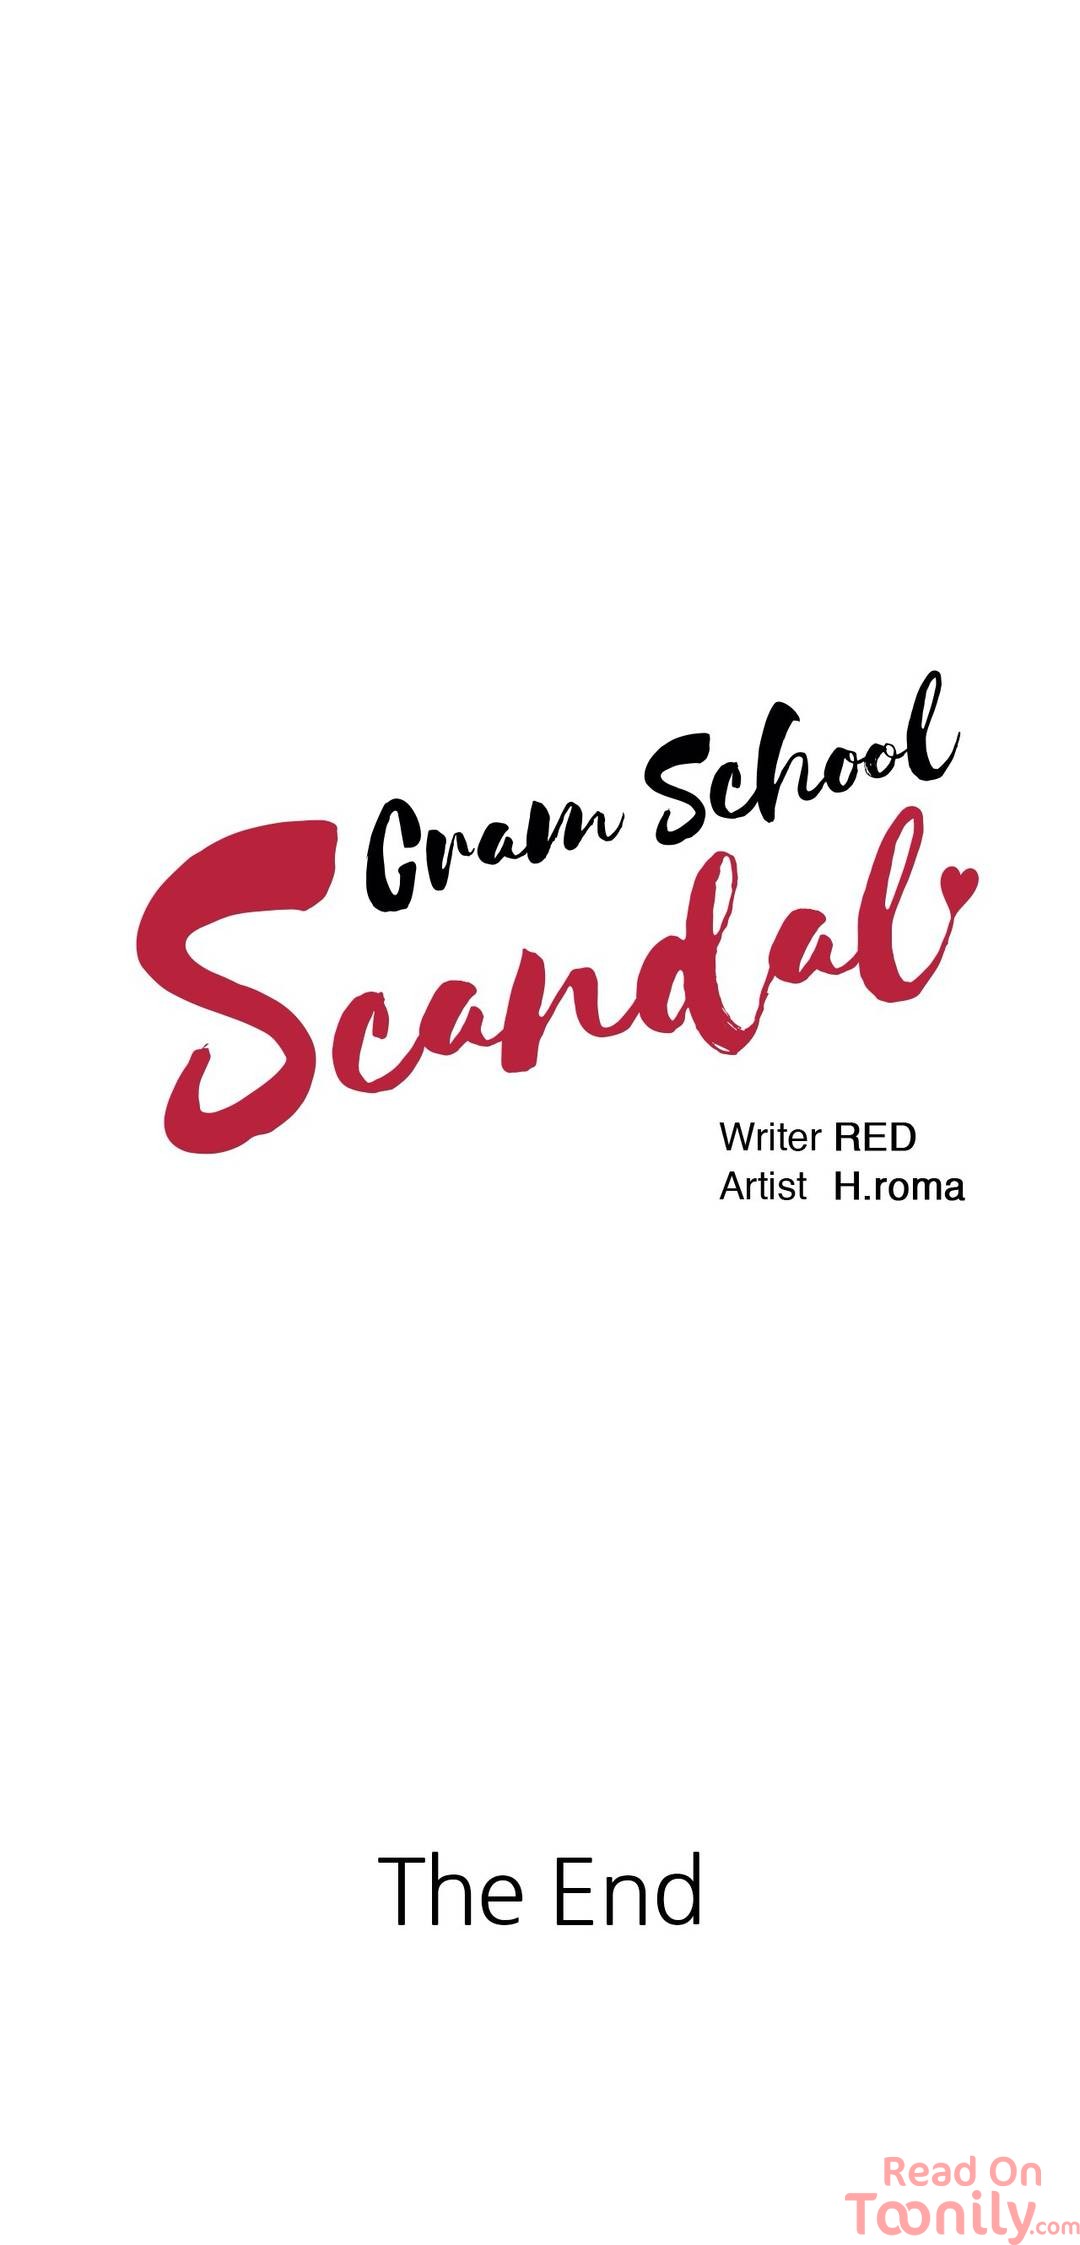 Cram School Scandal image